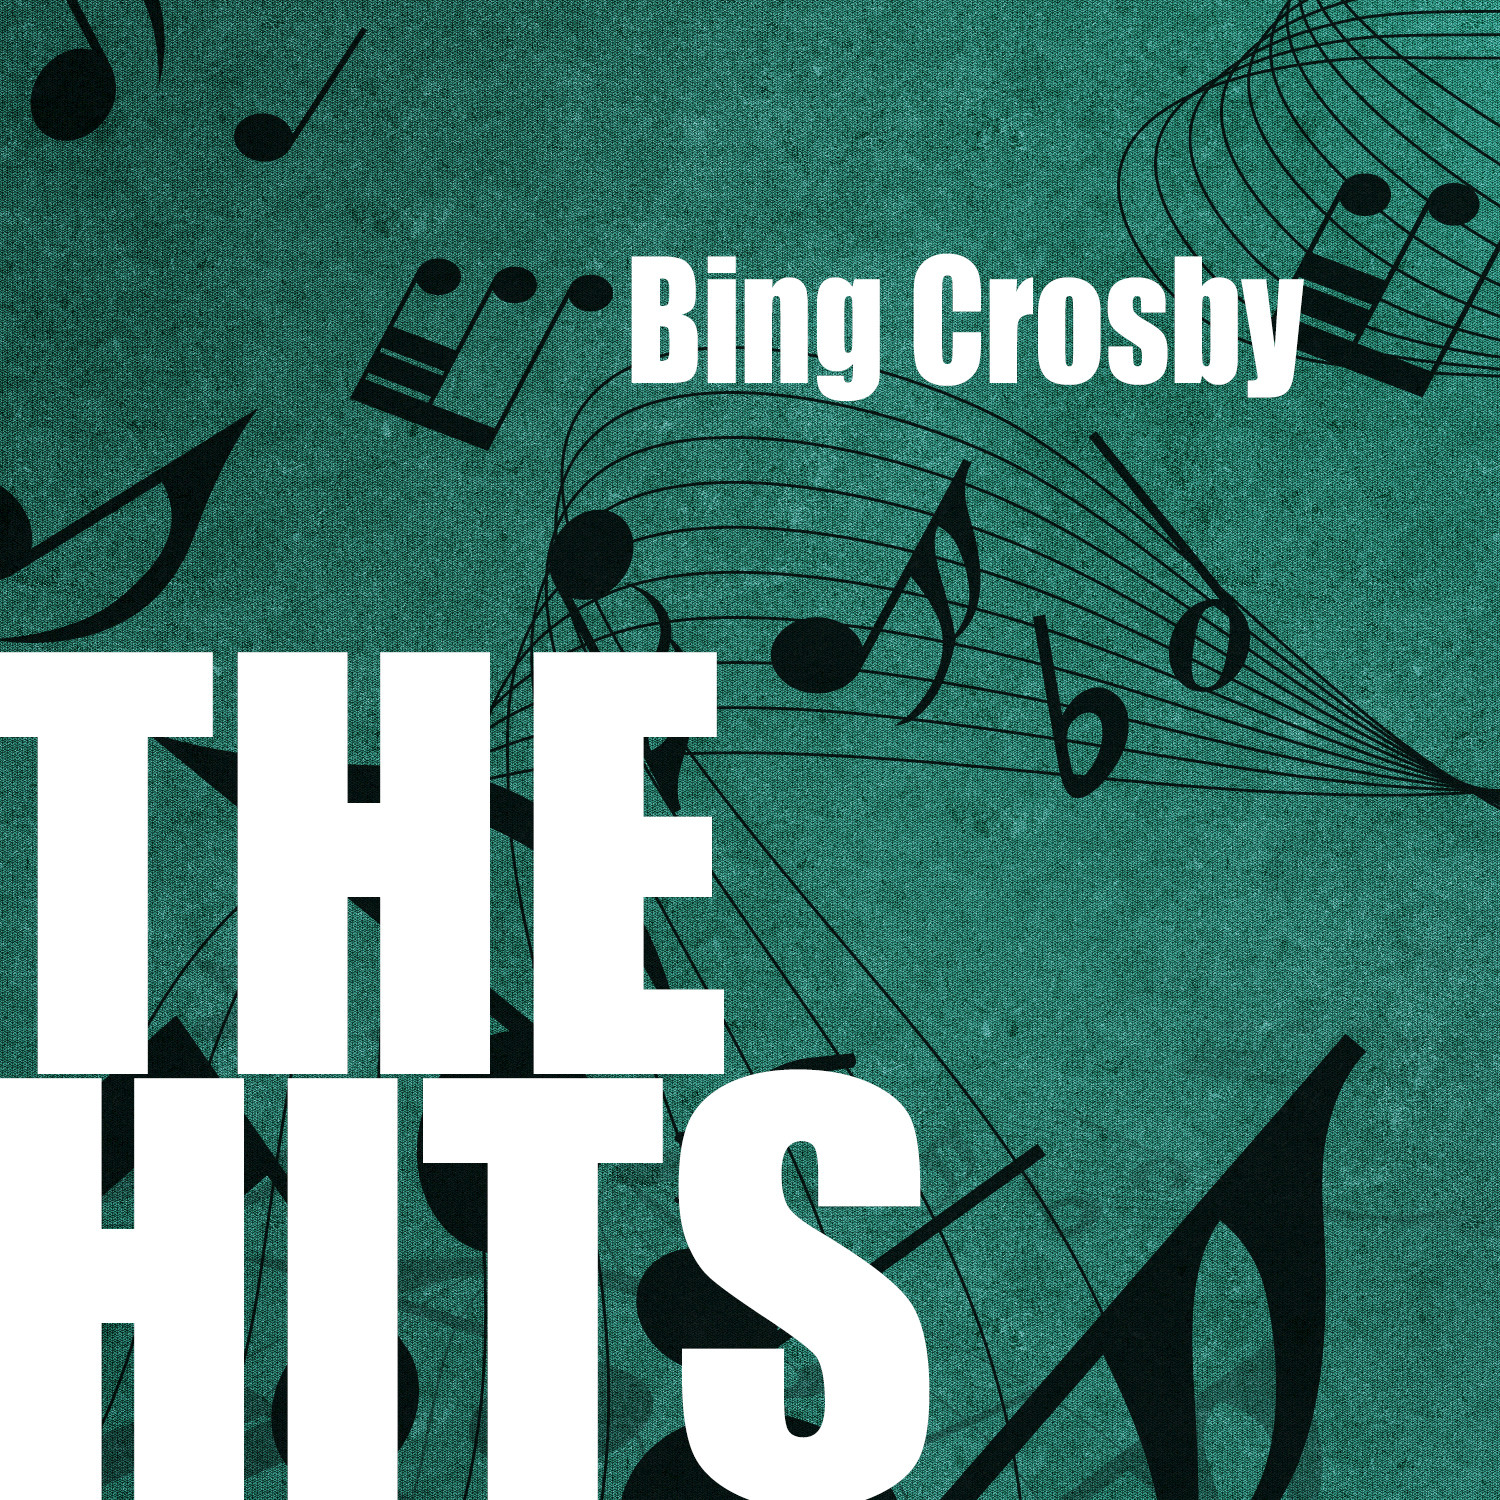 Bing Crosby: The Hits